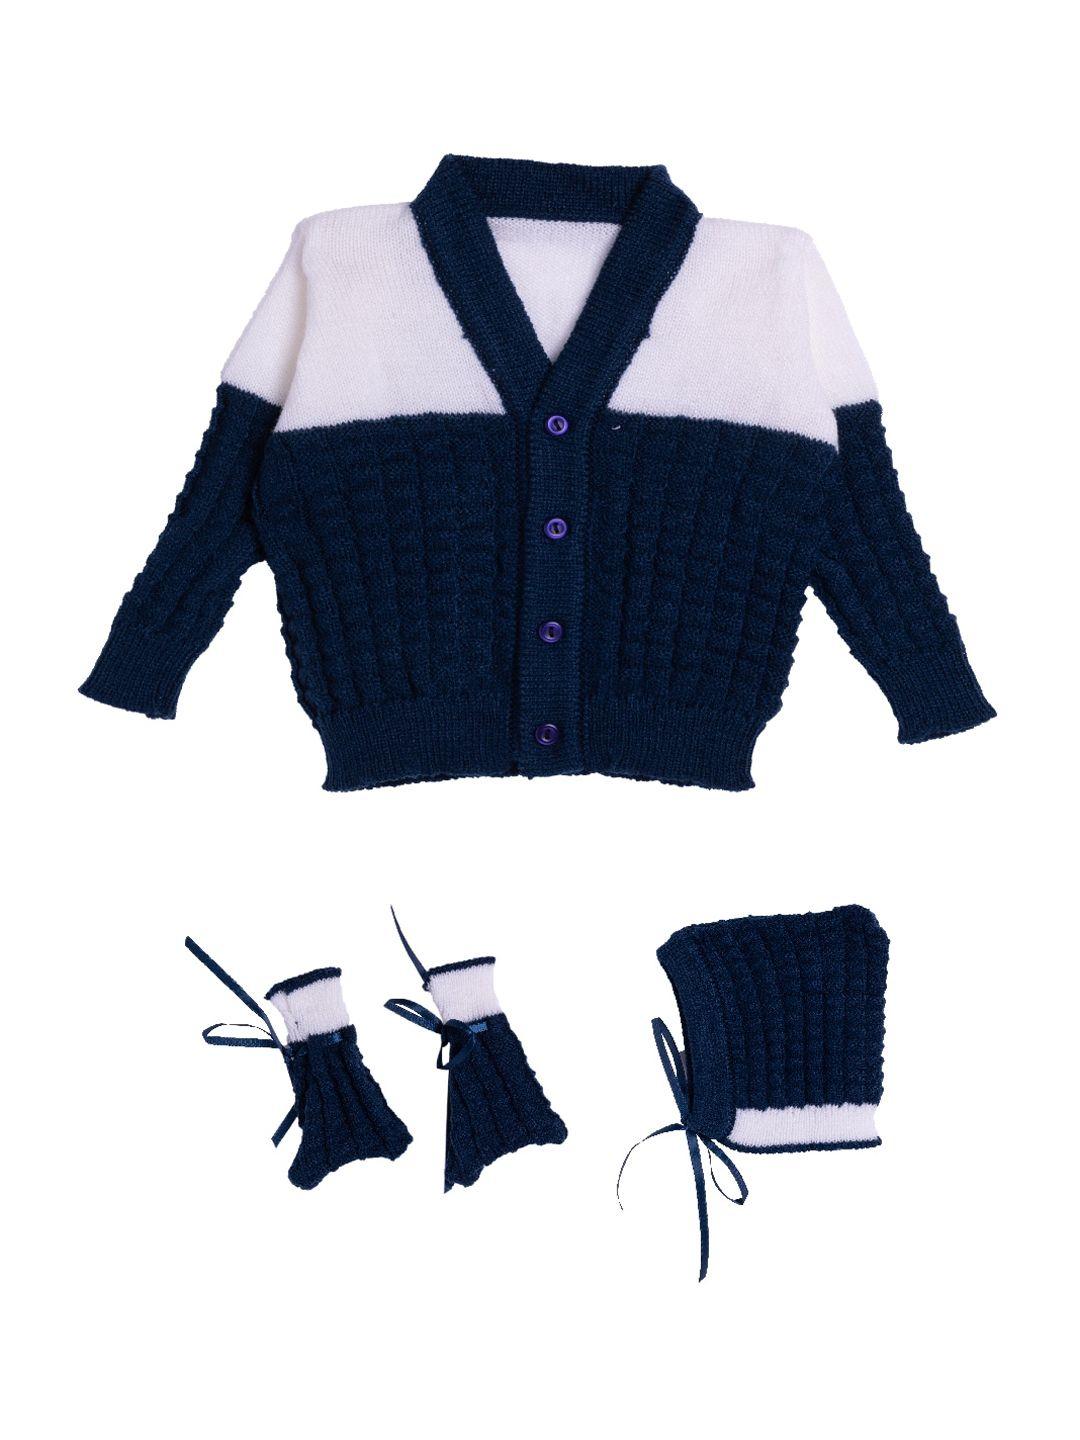 little angels infants navy-blue & white acrlic cardigan sweater set